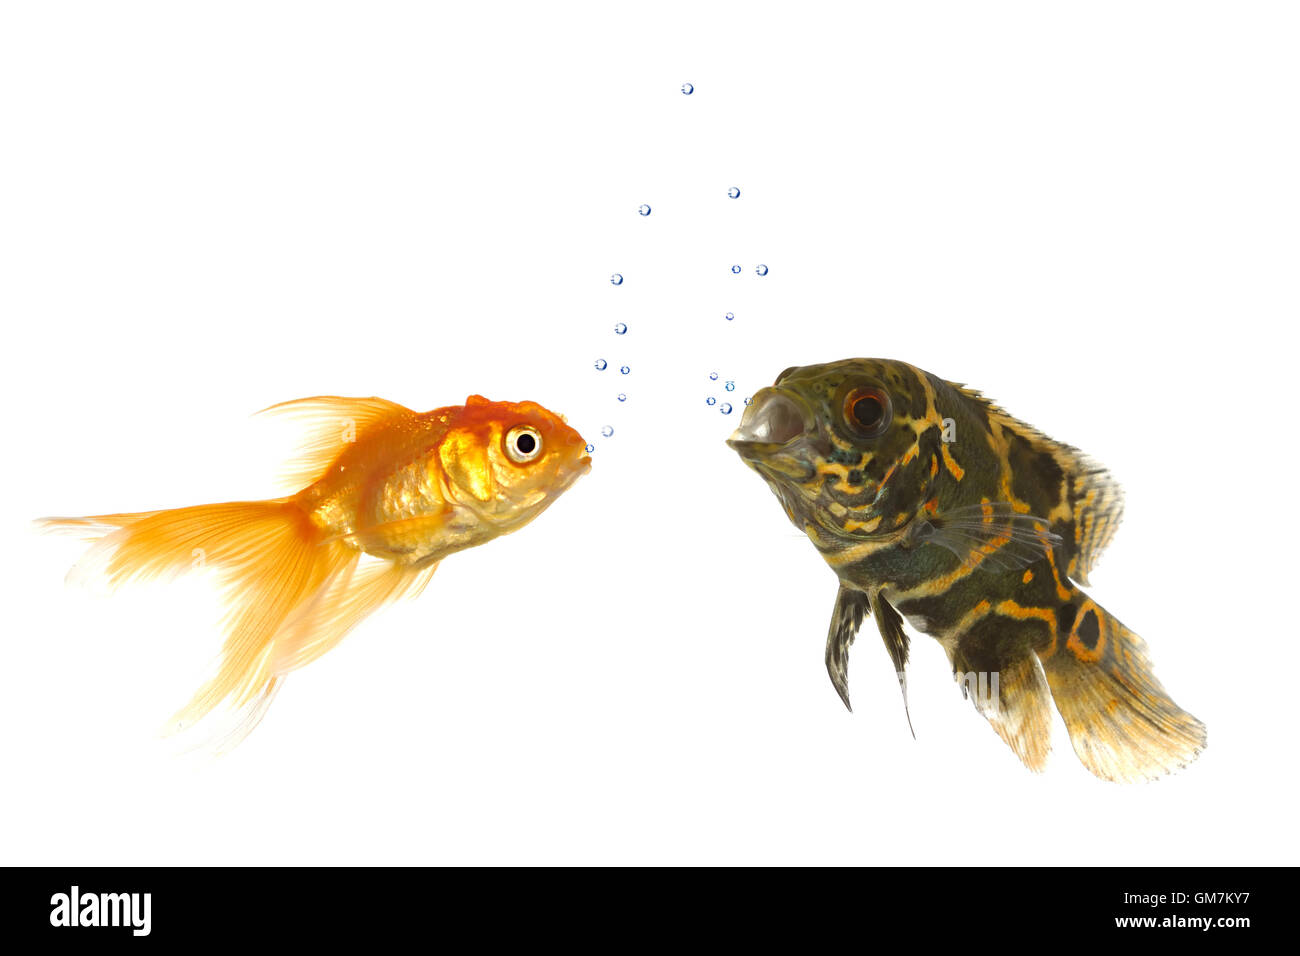 Goldfish and tiger oscar fish Stock Photo